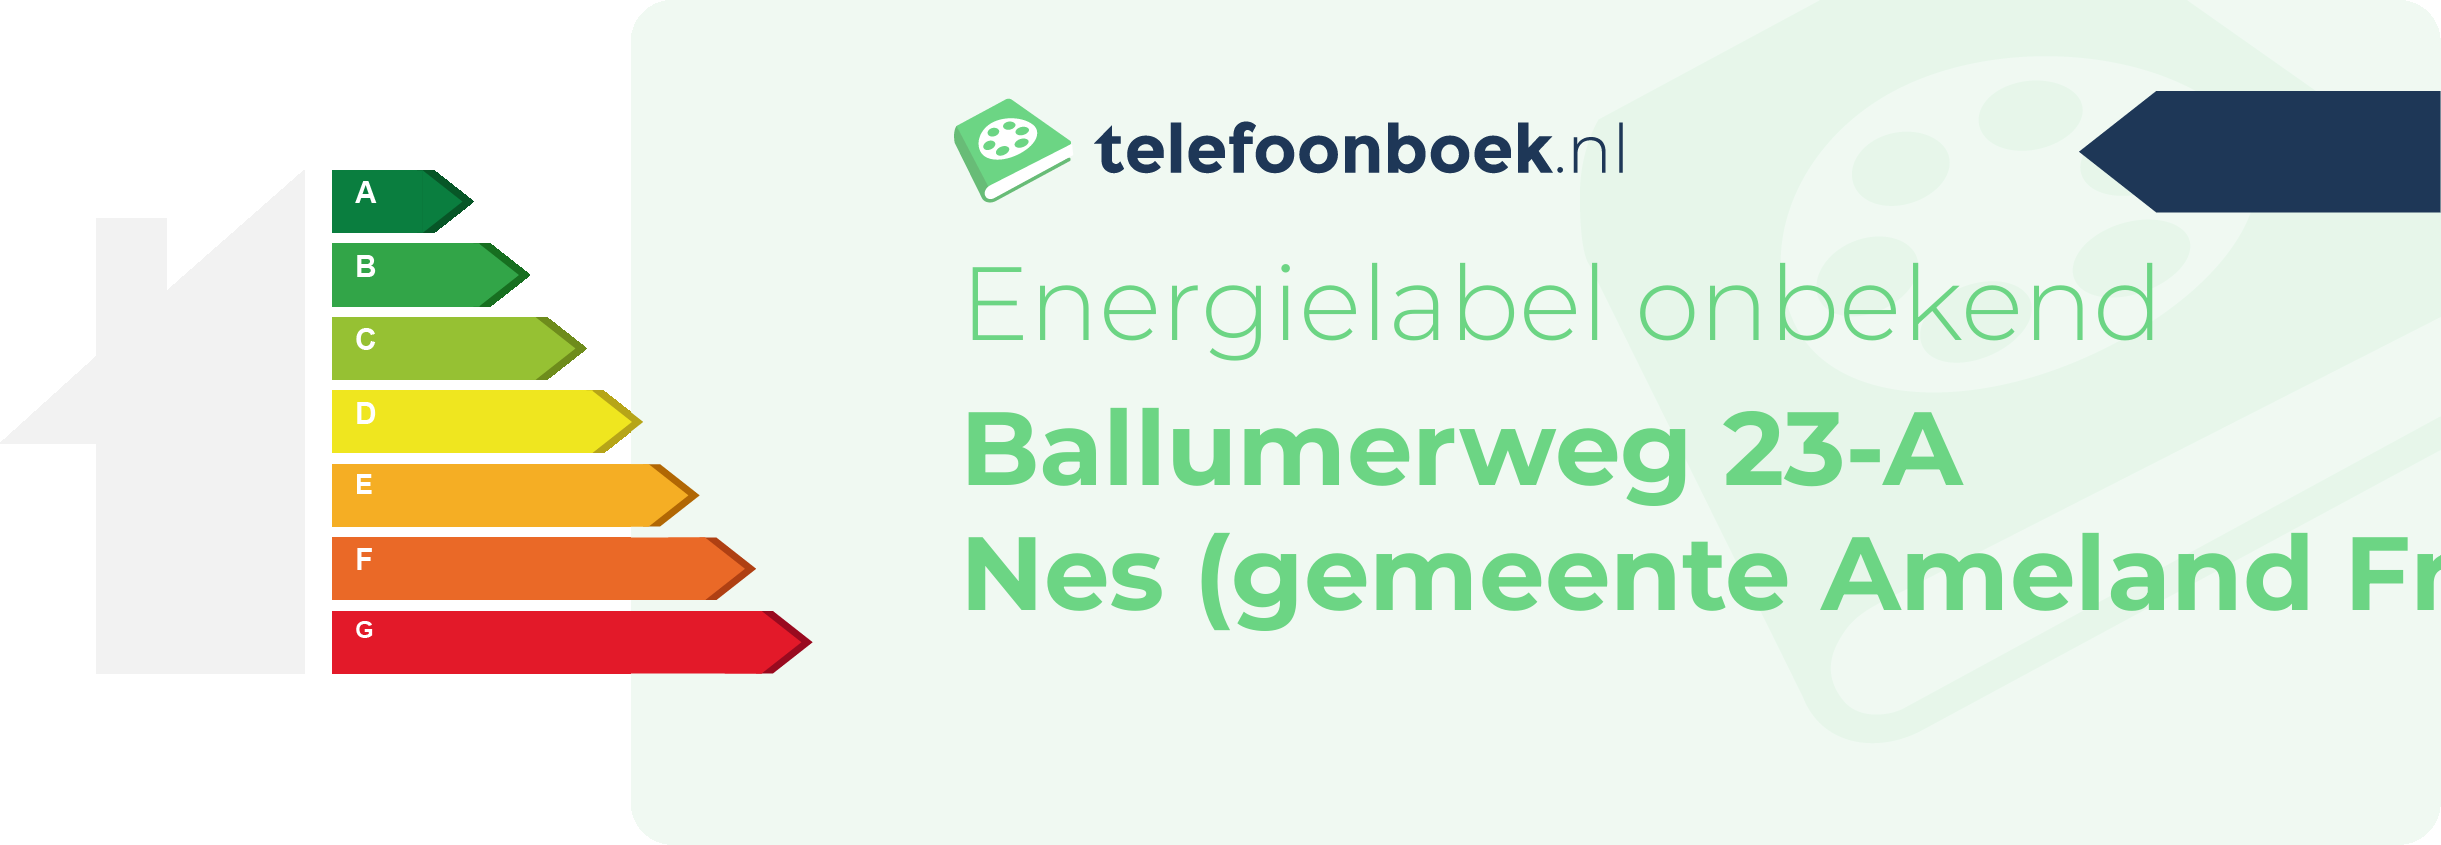 Energielabel Ballumerweg 23-A Nes (gemeente Ameland Friesland)